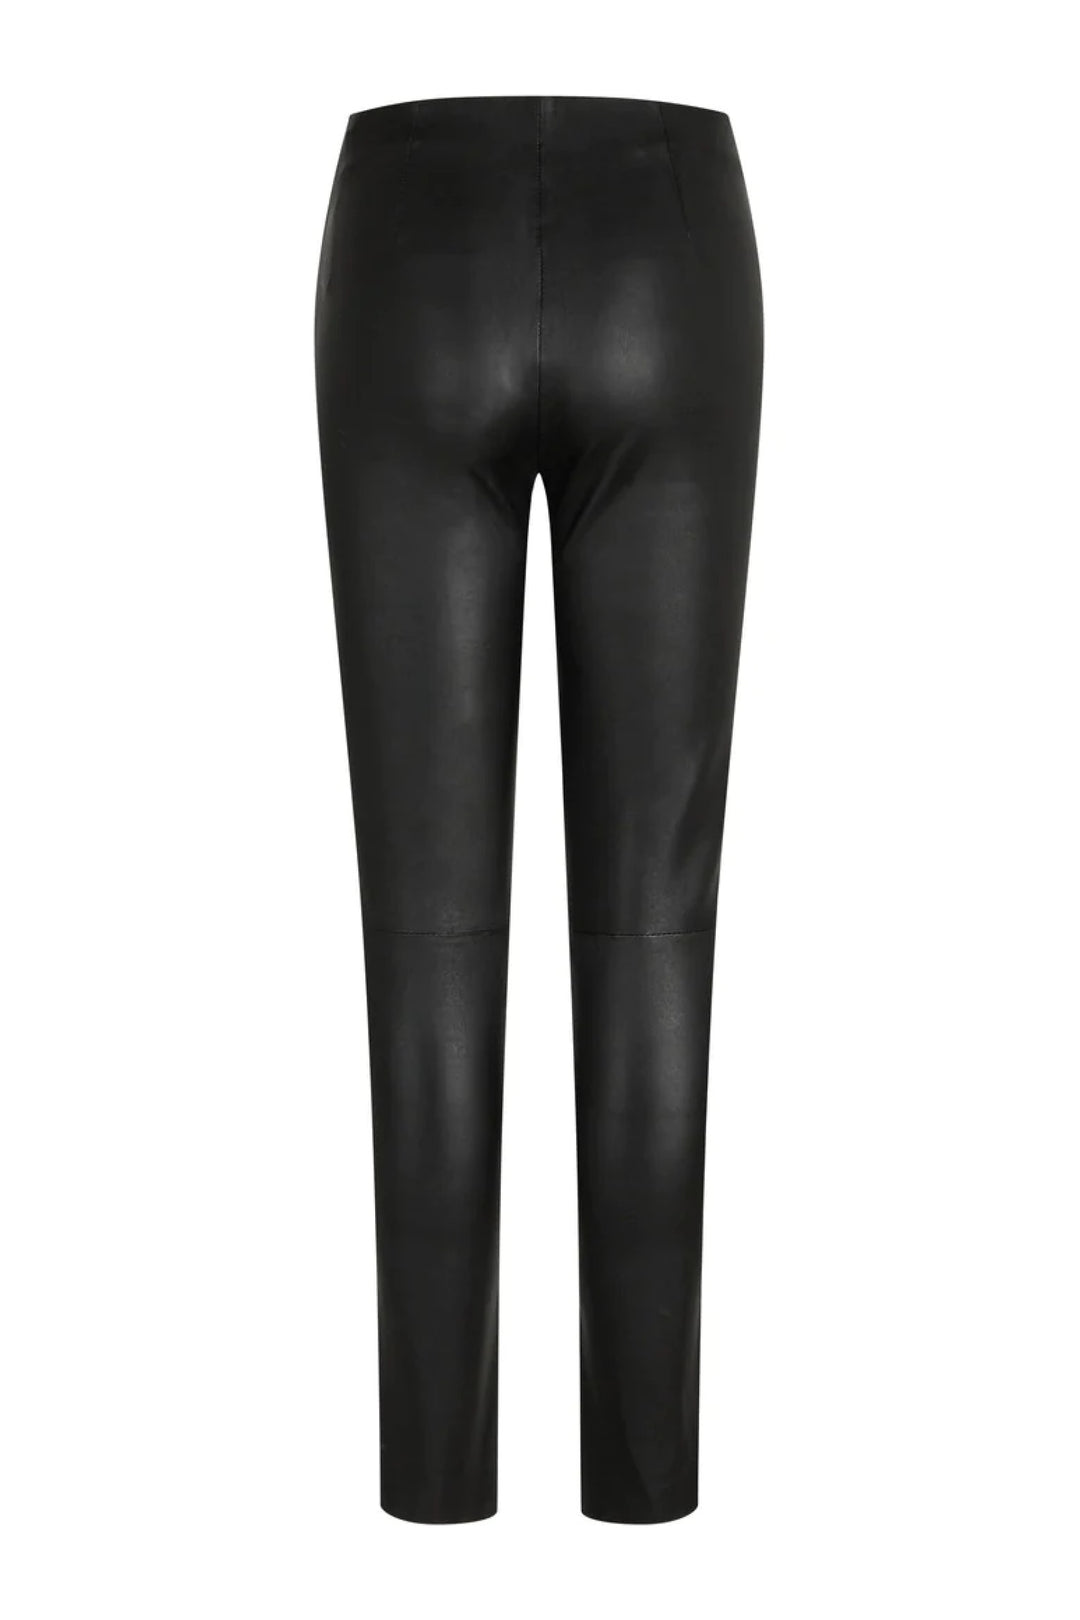 Bruuns Bazaar Women Chrissy Læder Leggins Pants Black